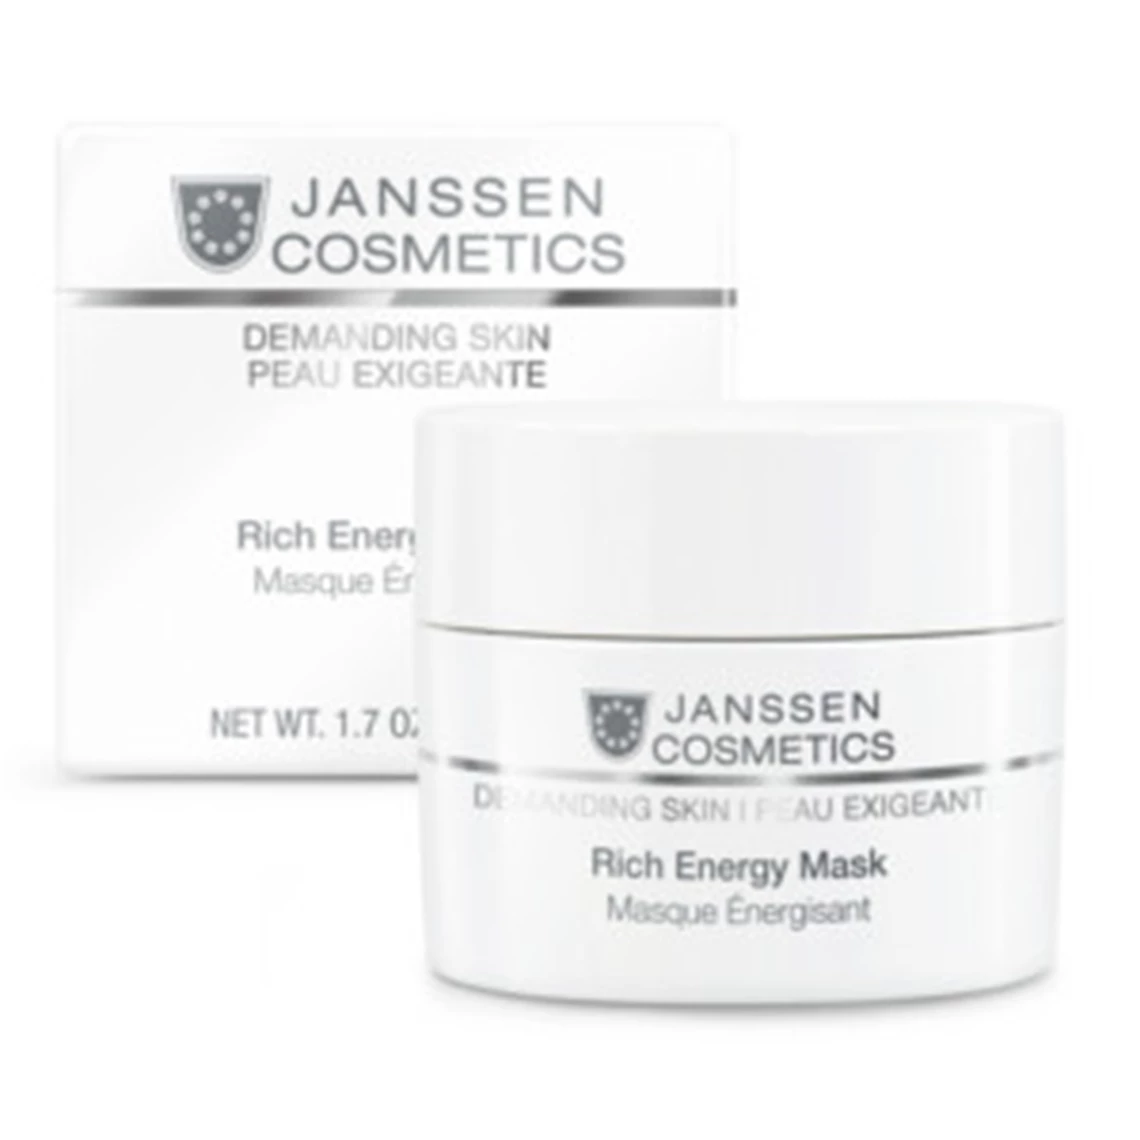 Rich Energy Mask by Janssen Cosmetics